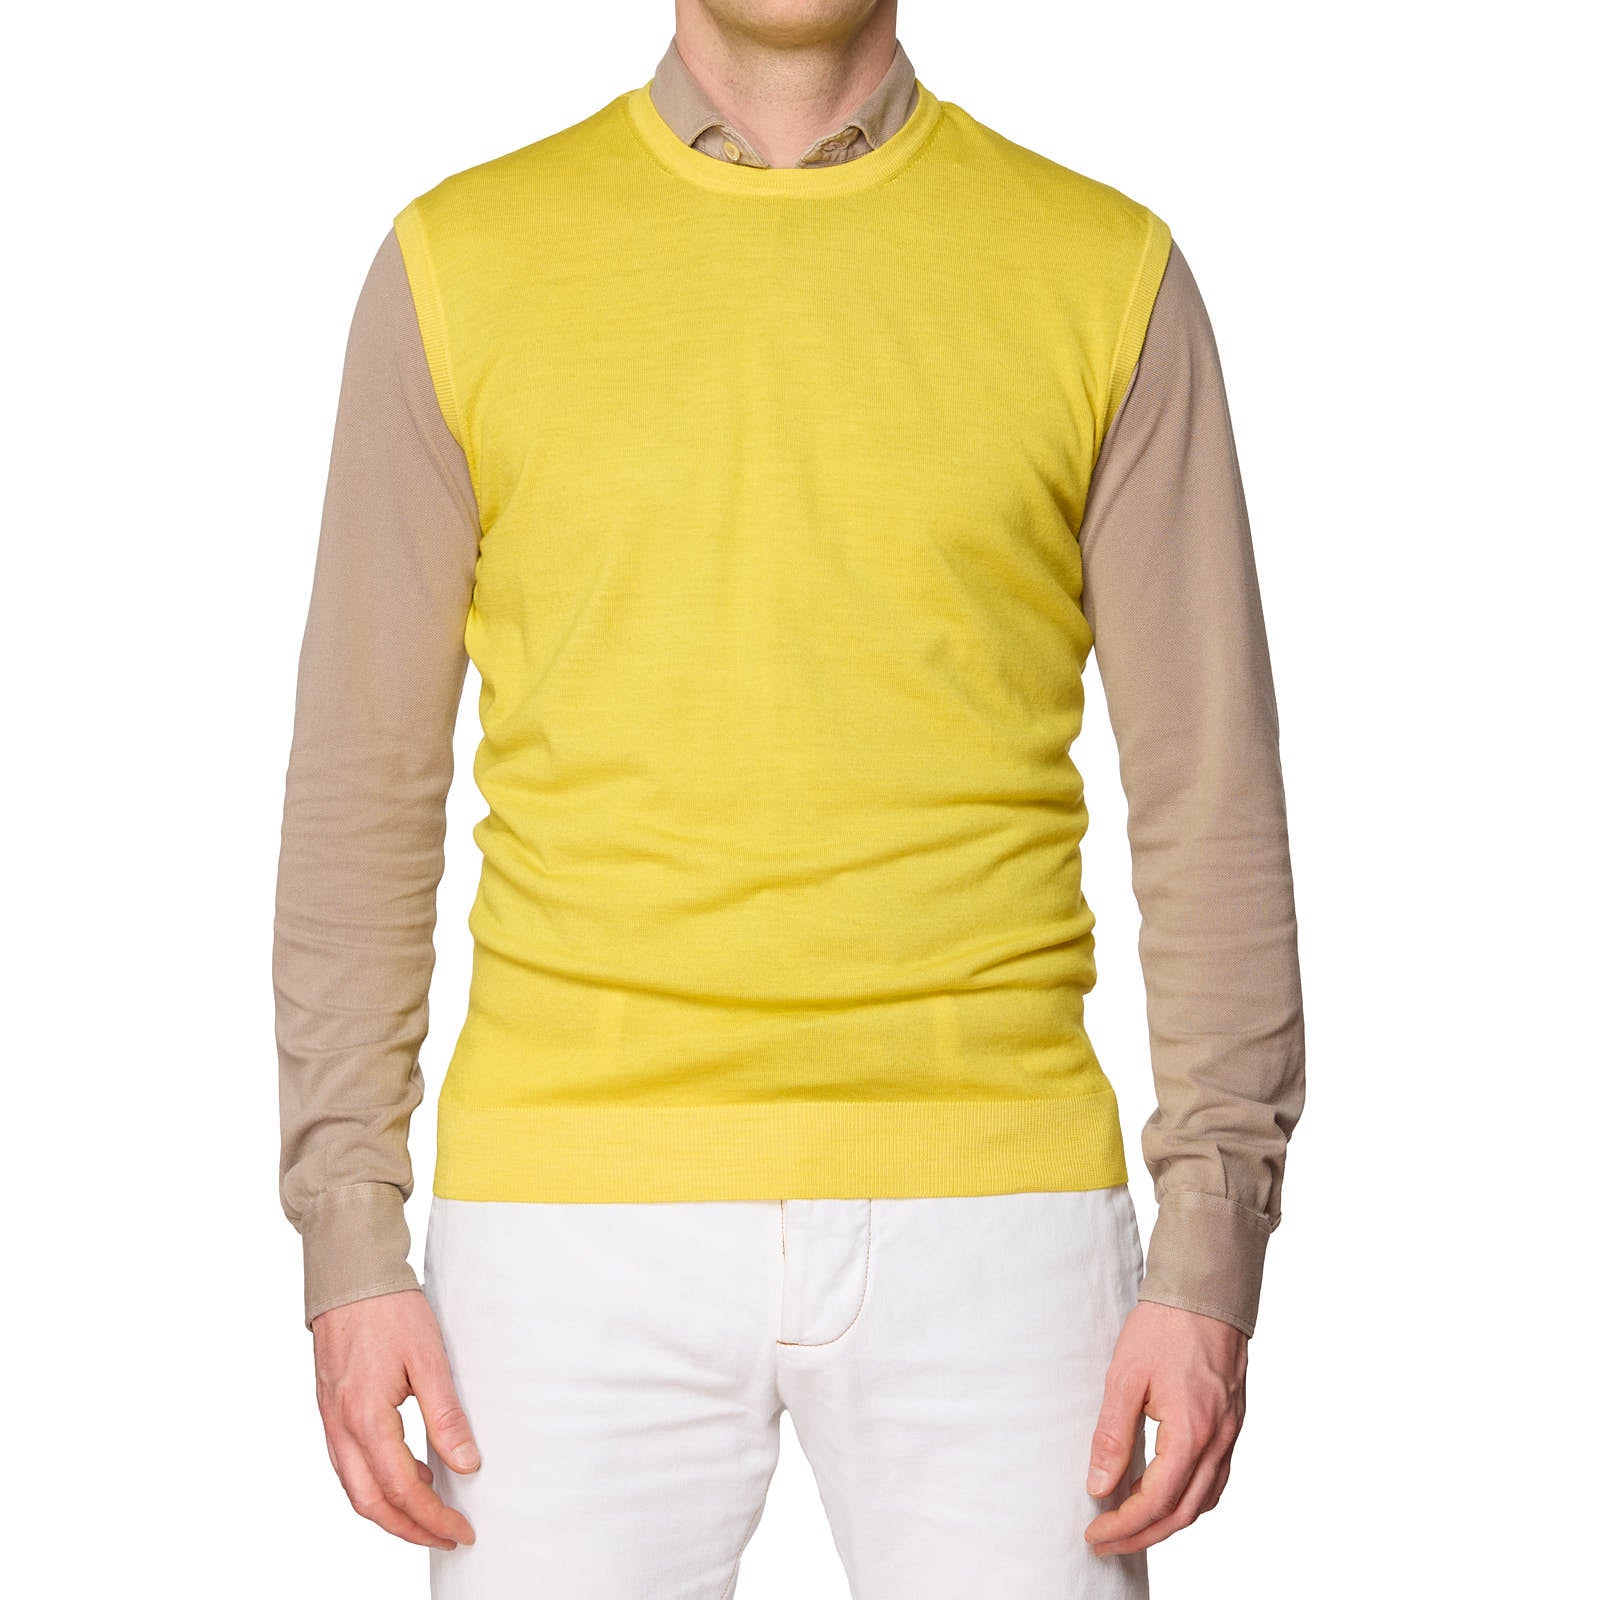 ONES Yellow Wool Knit Sweater Vest EU 52 NEW US L